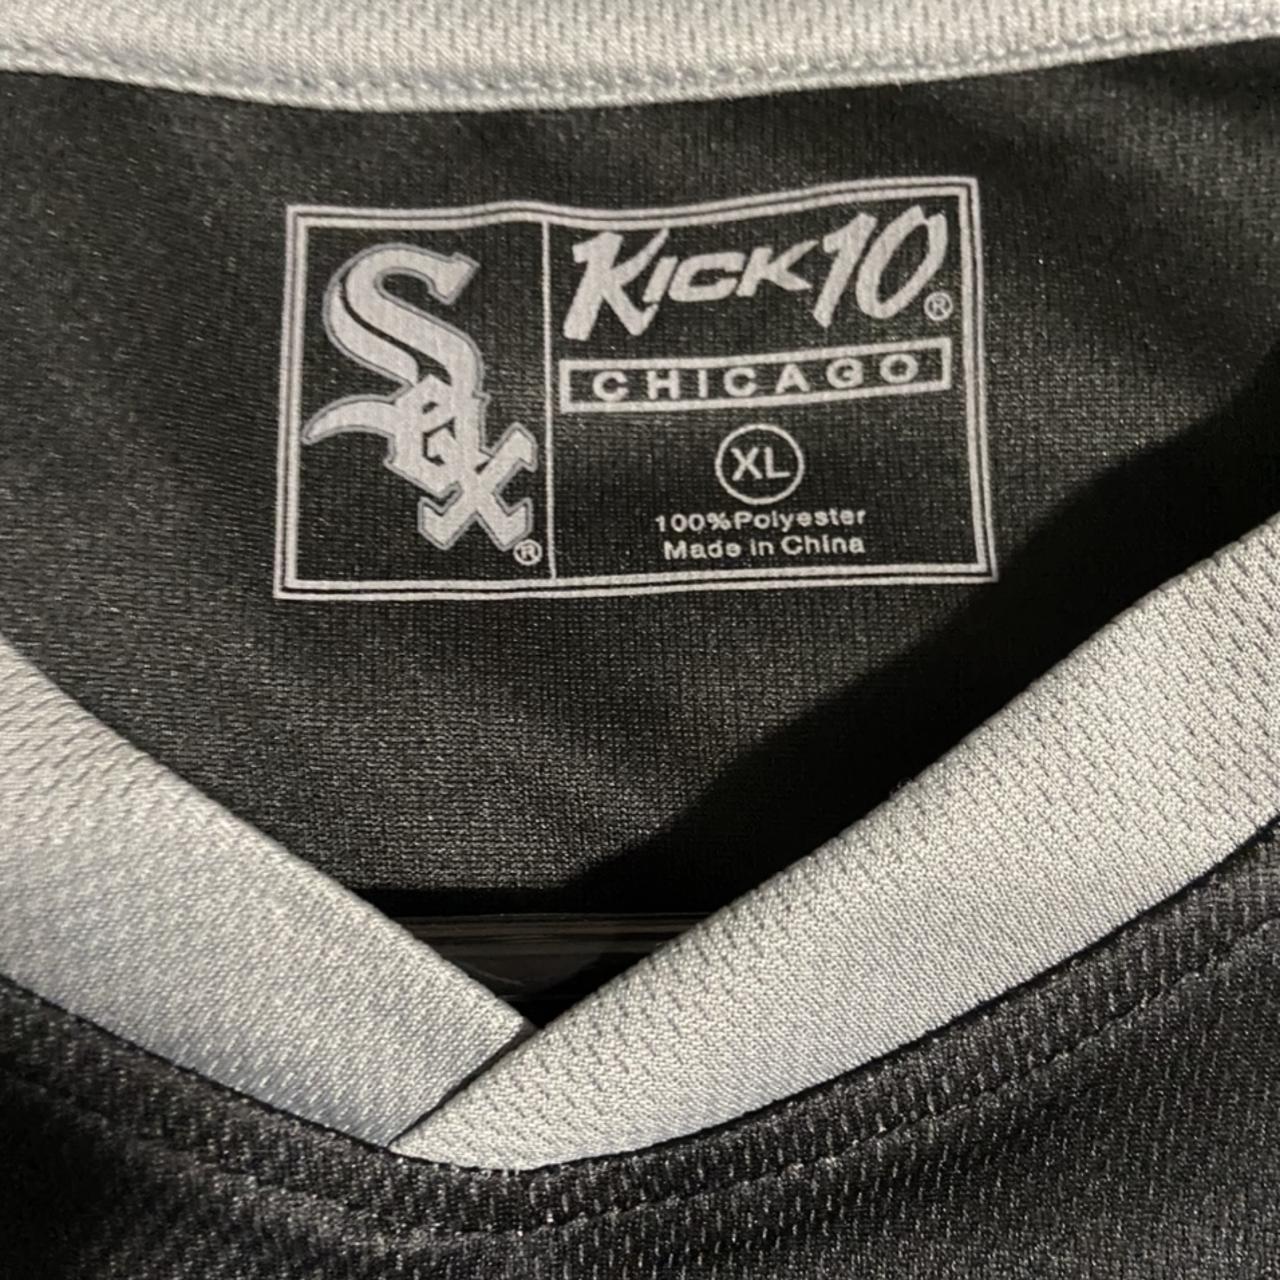 Chicago White Sox SGA Los White Sox soccer jersey size medium￼ 9/12/21